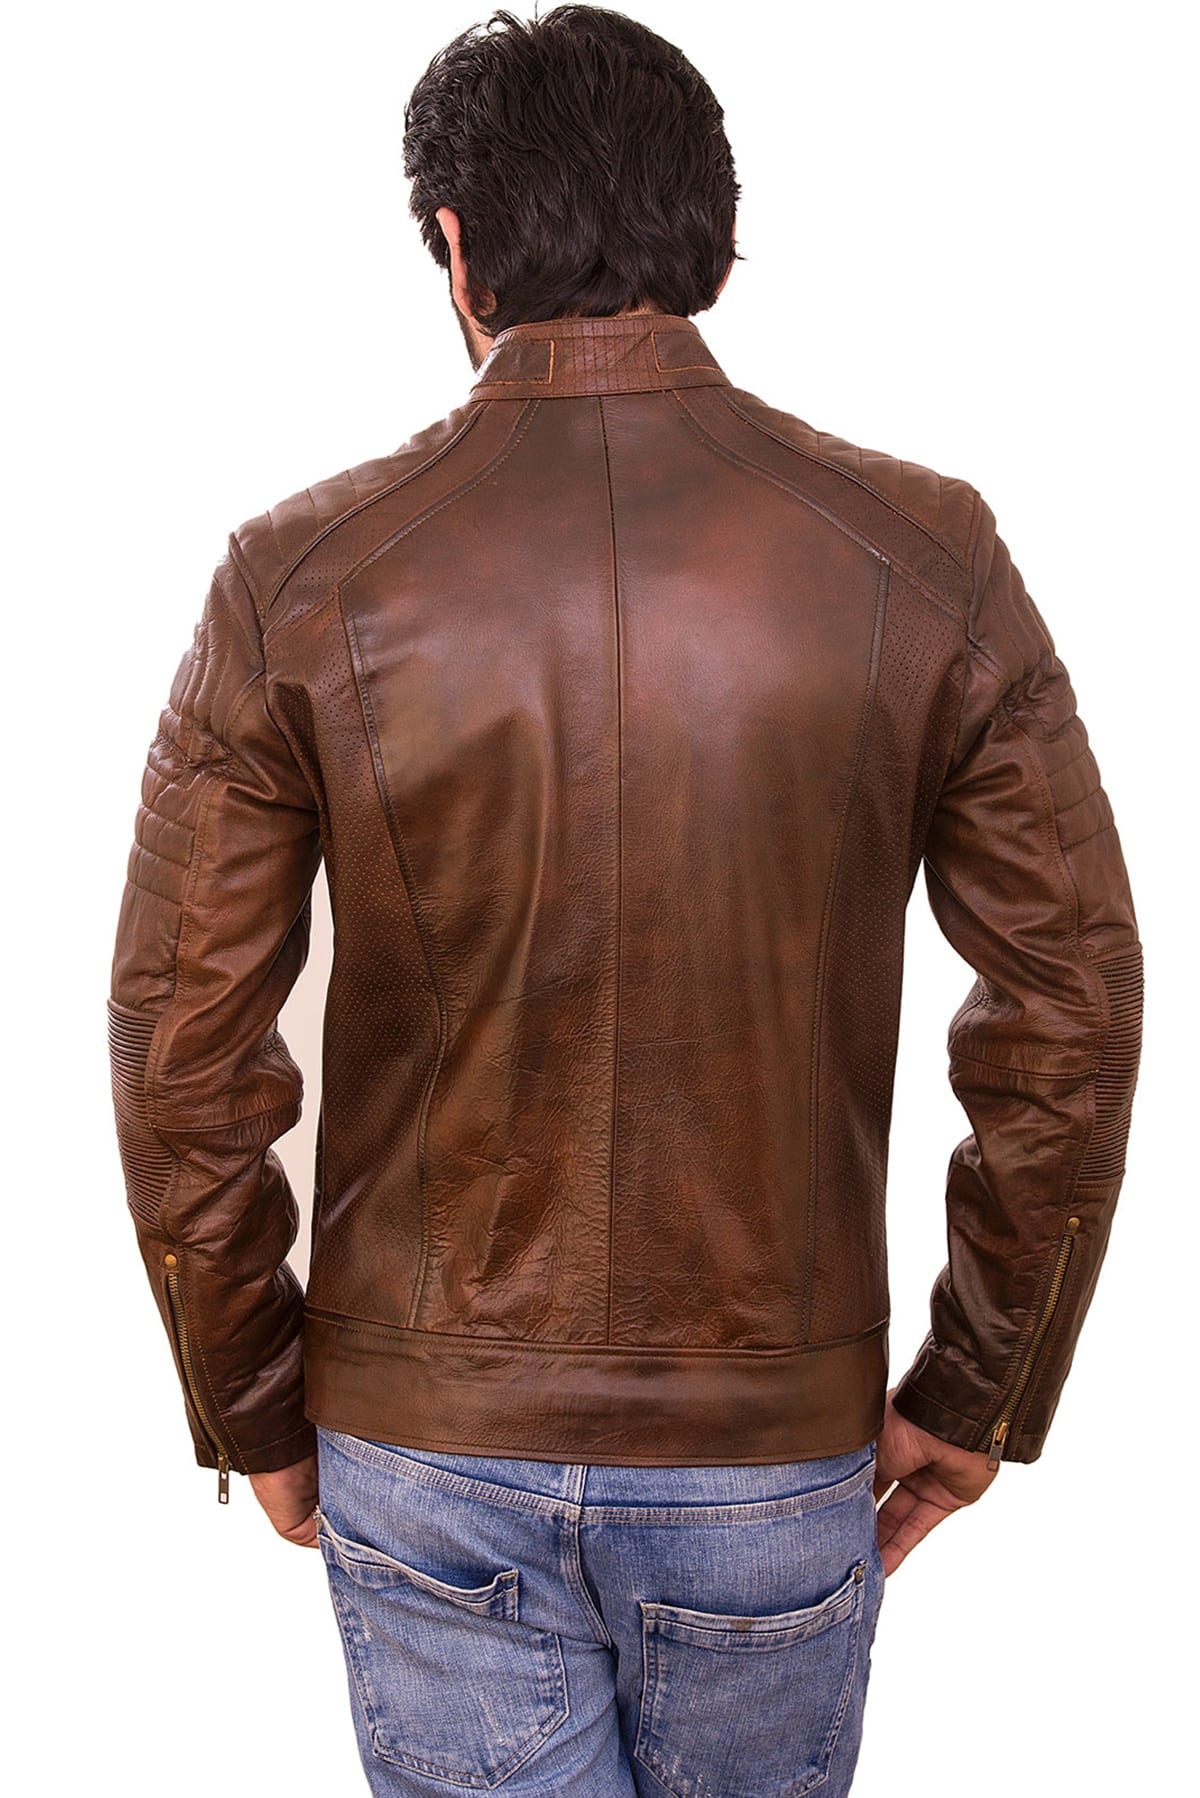 genuine leather jacket mens ebay